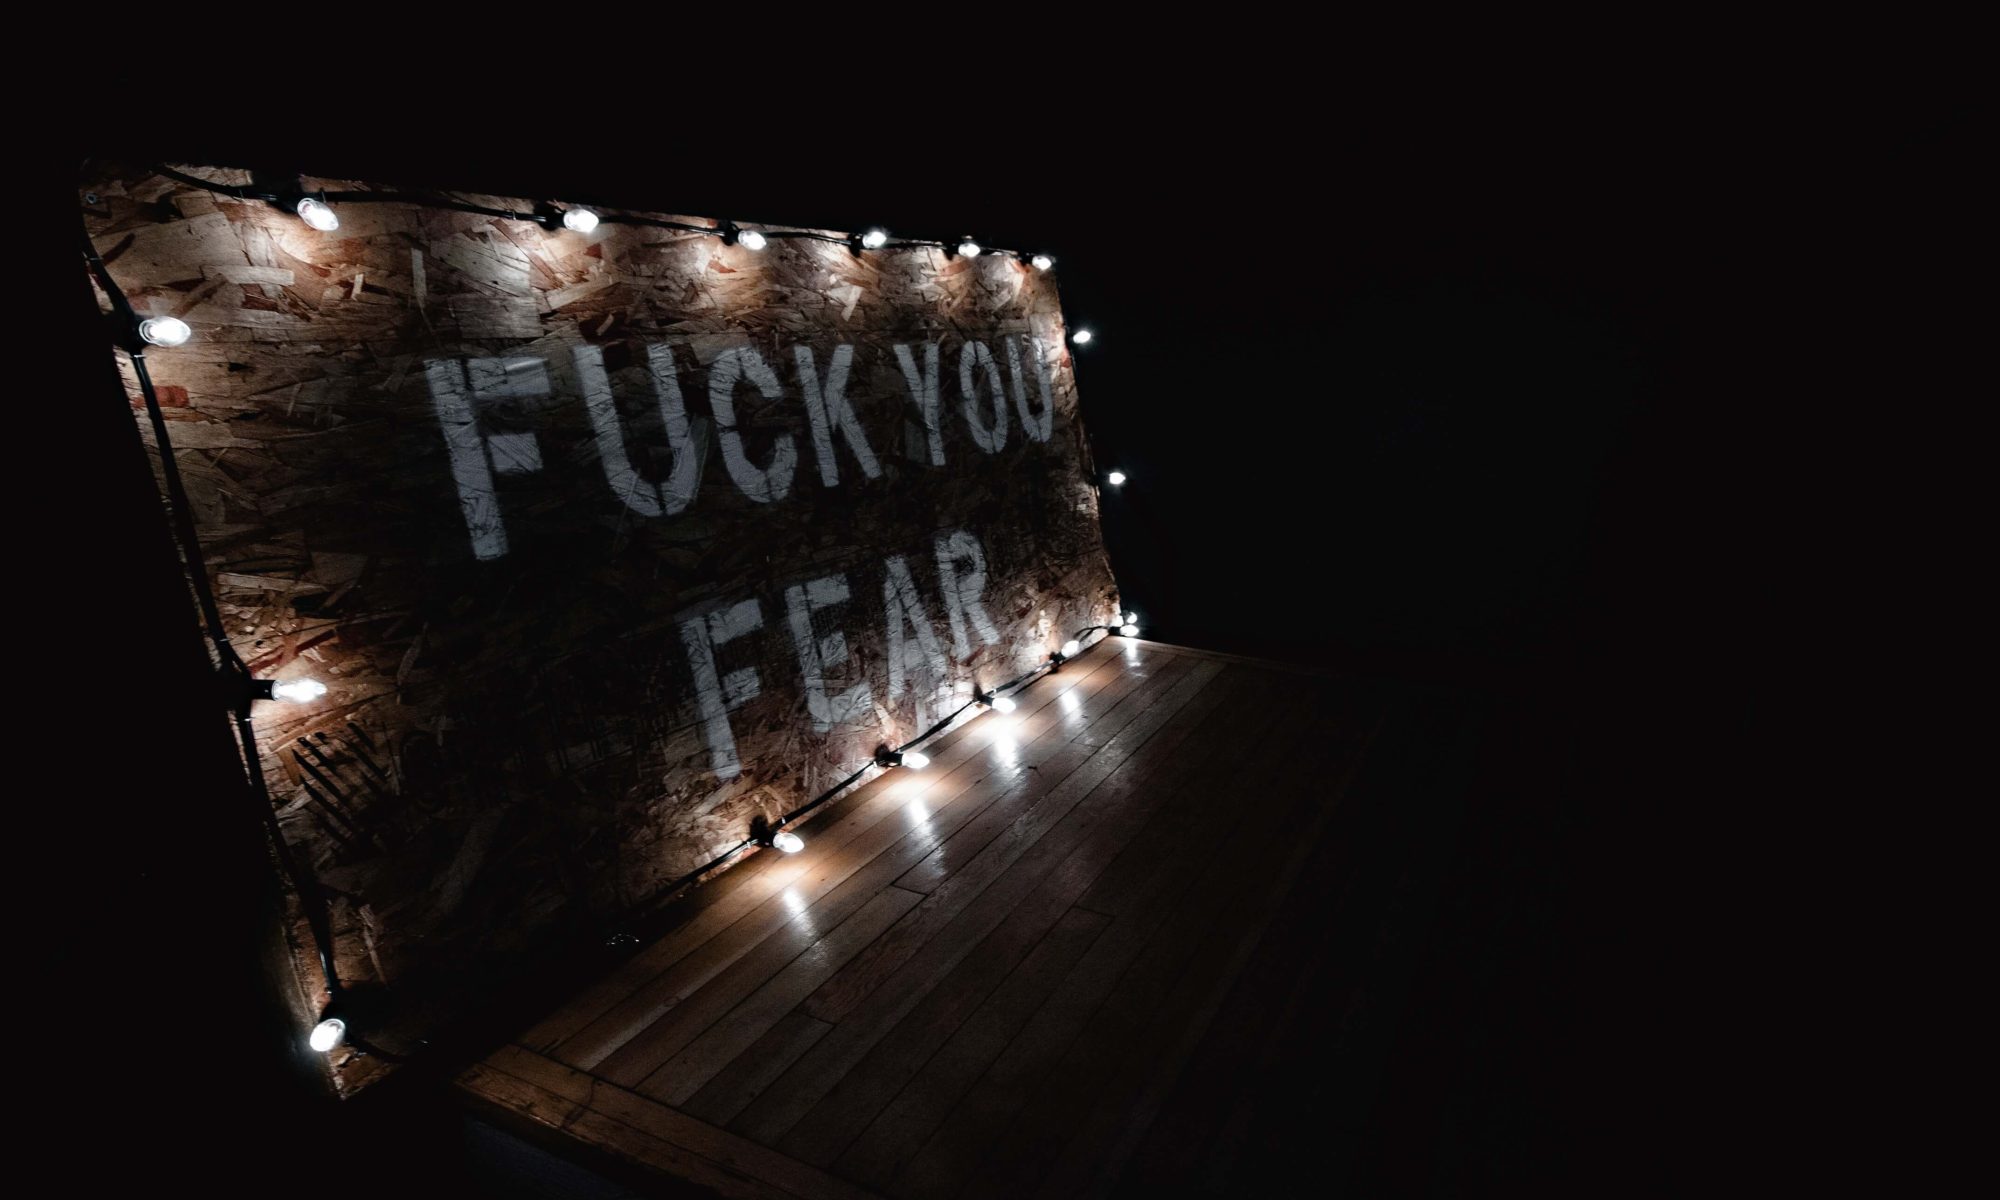 placa escrito "foda-se o medo"